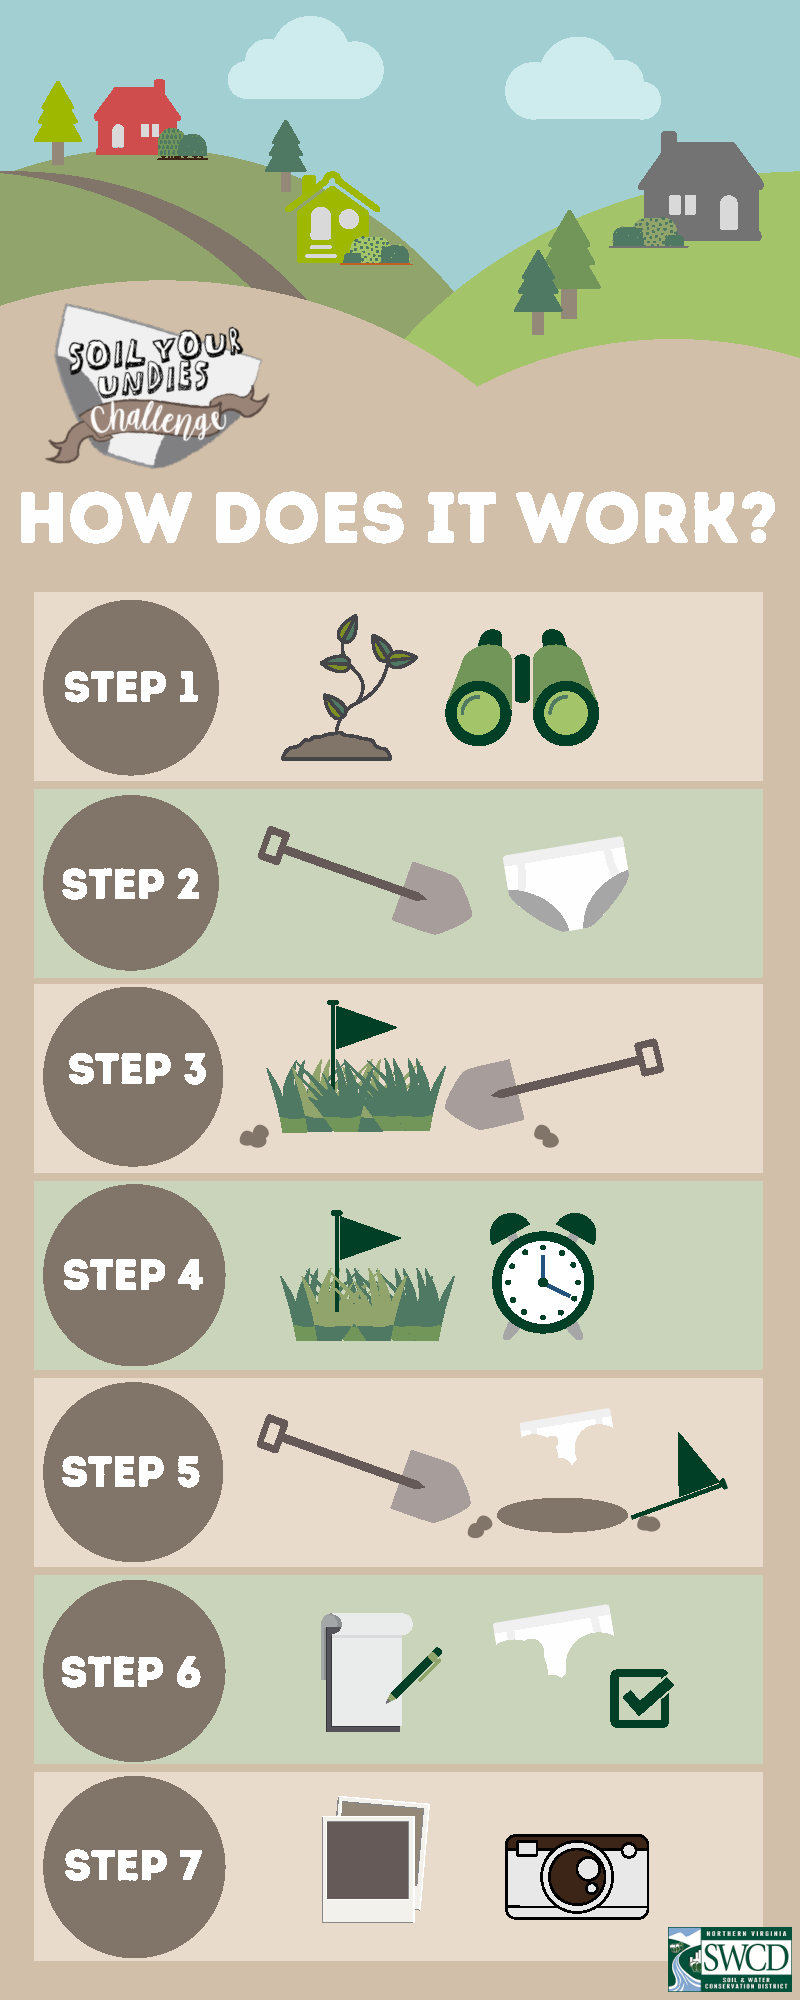 Soil Your Undies Challenge Steps